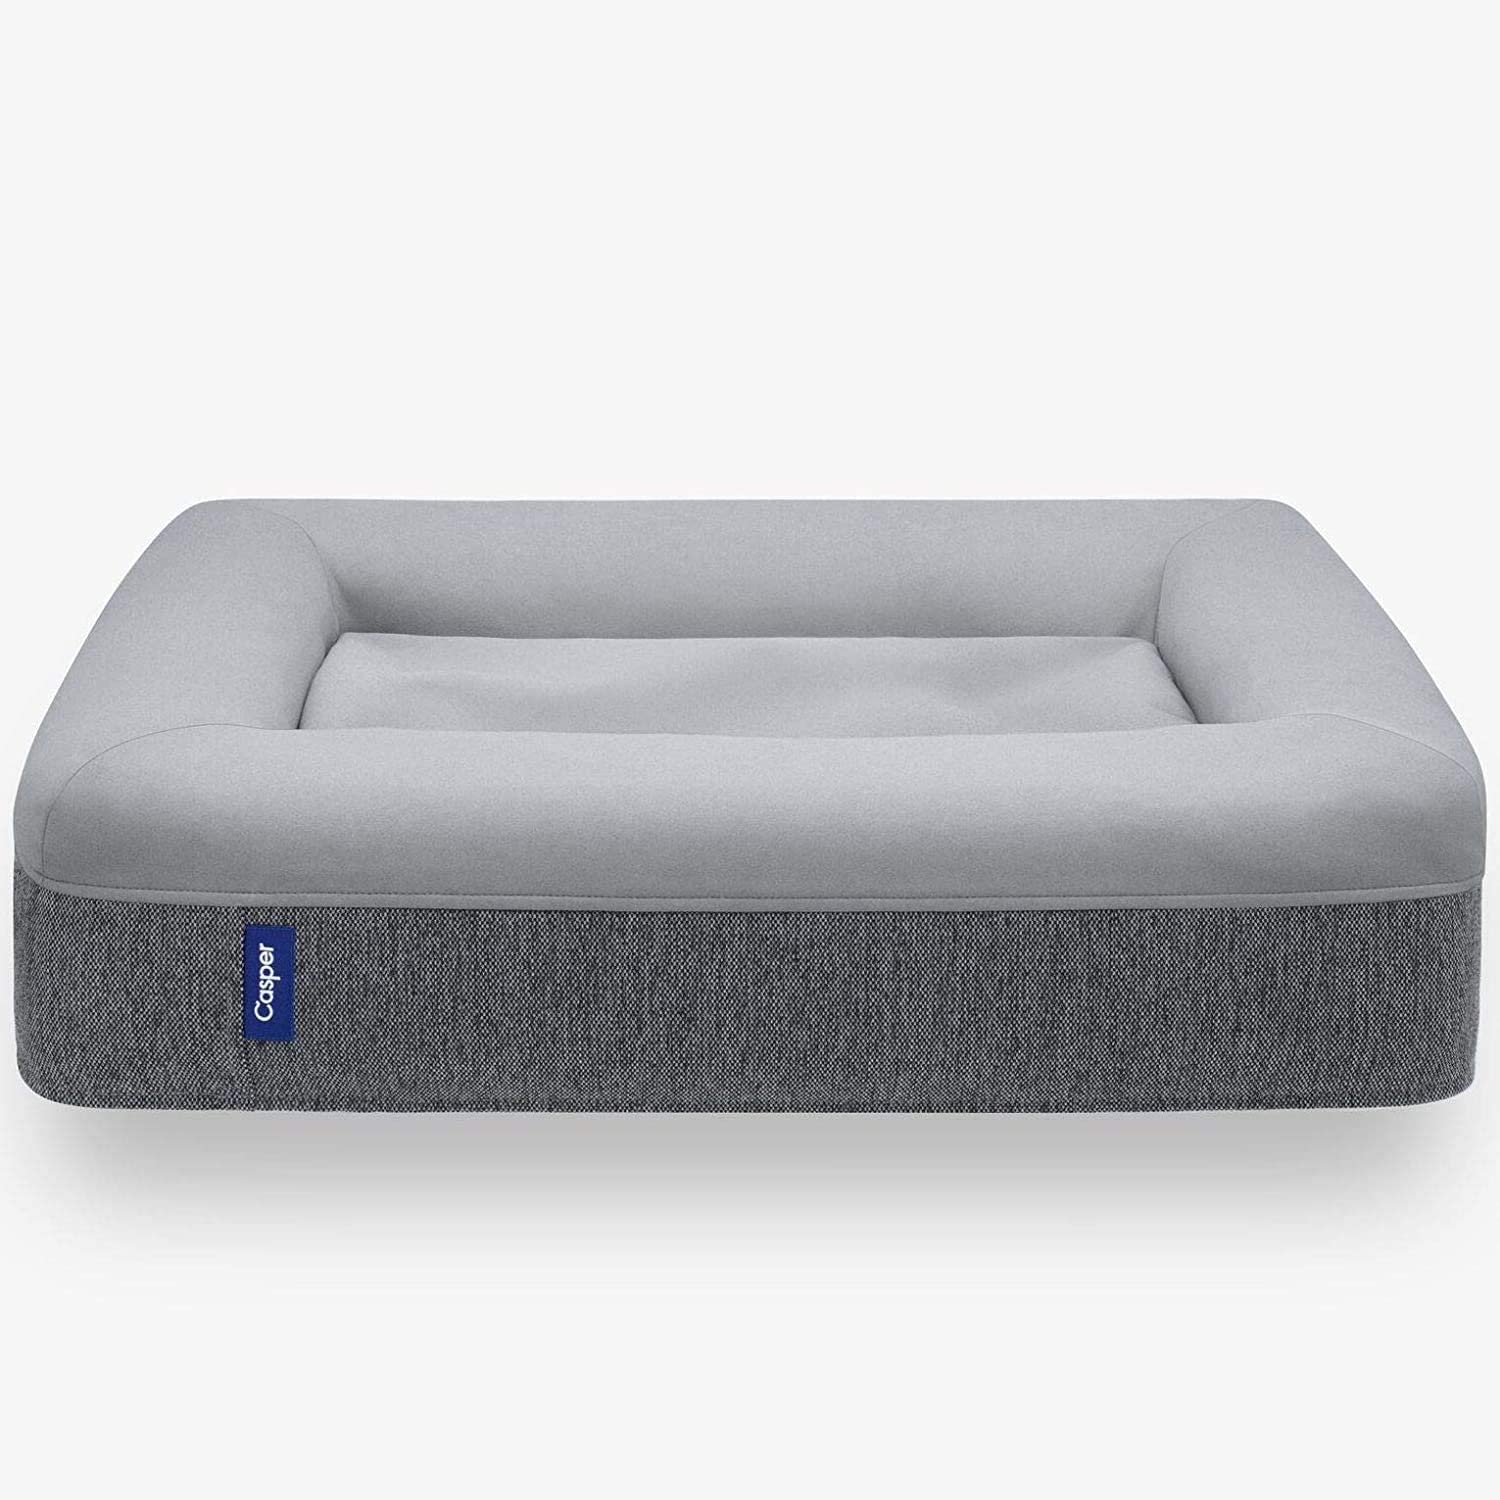 Casper Large Size Grey Dog Bed